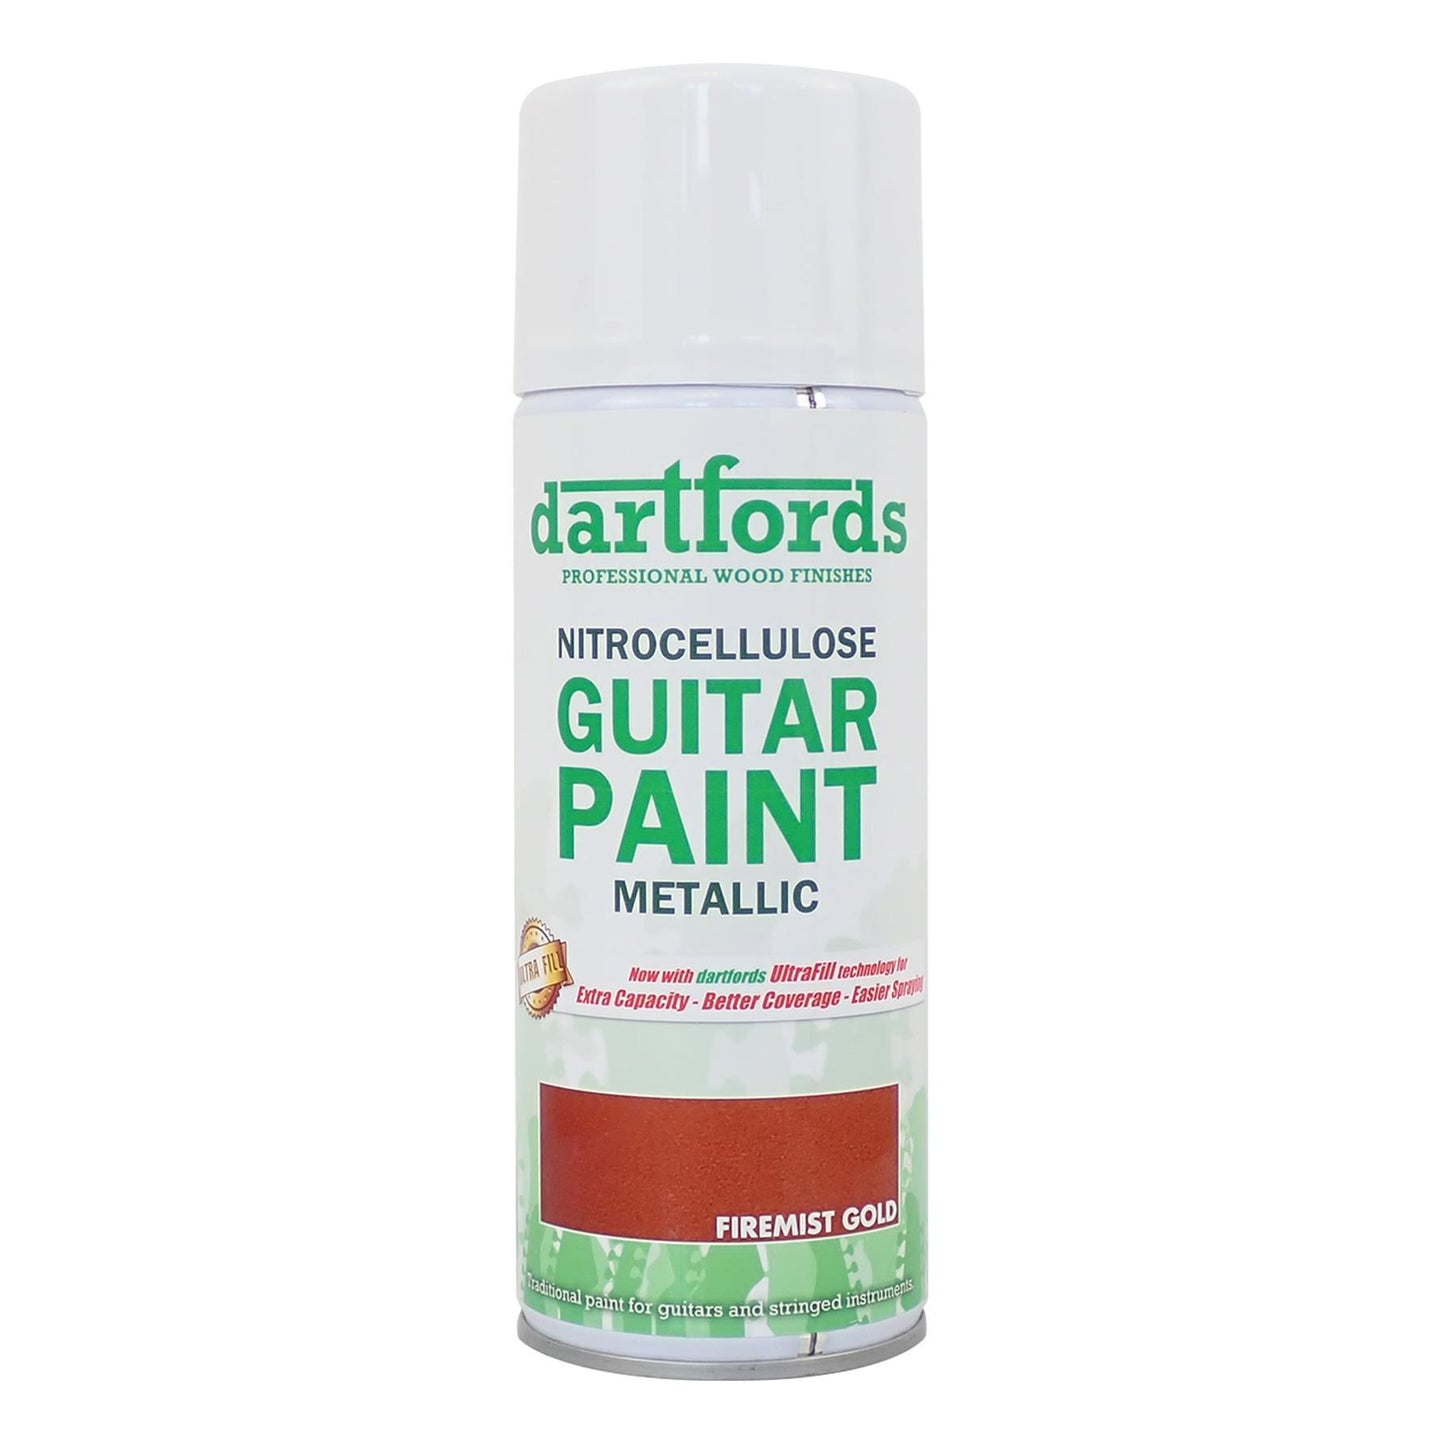 dartfords Firemist Gold Metallic Nitrocellulose Guitar Paint - 400ml Aerosol